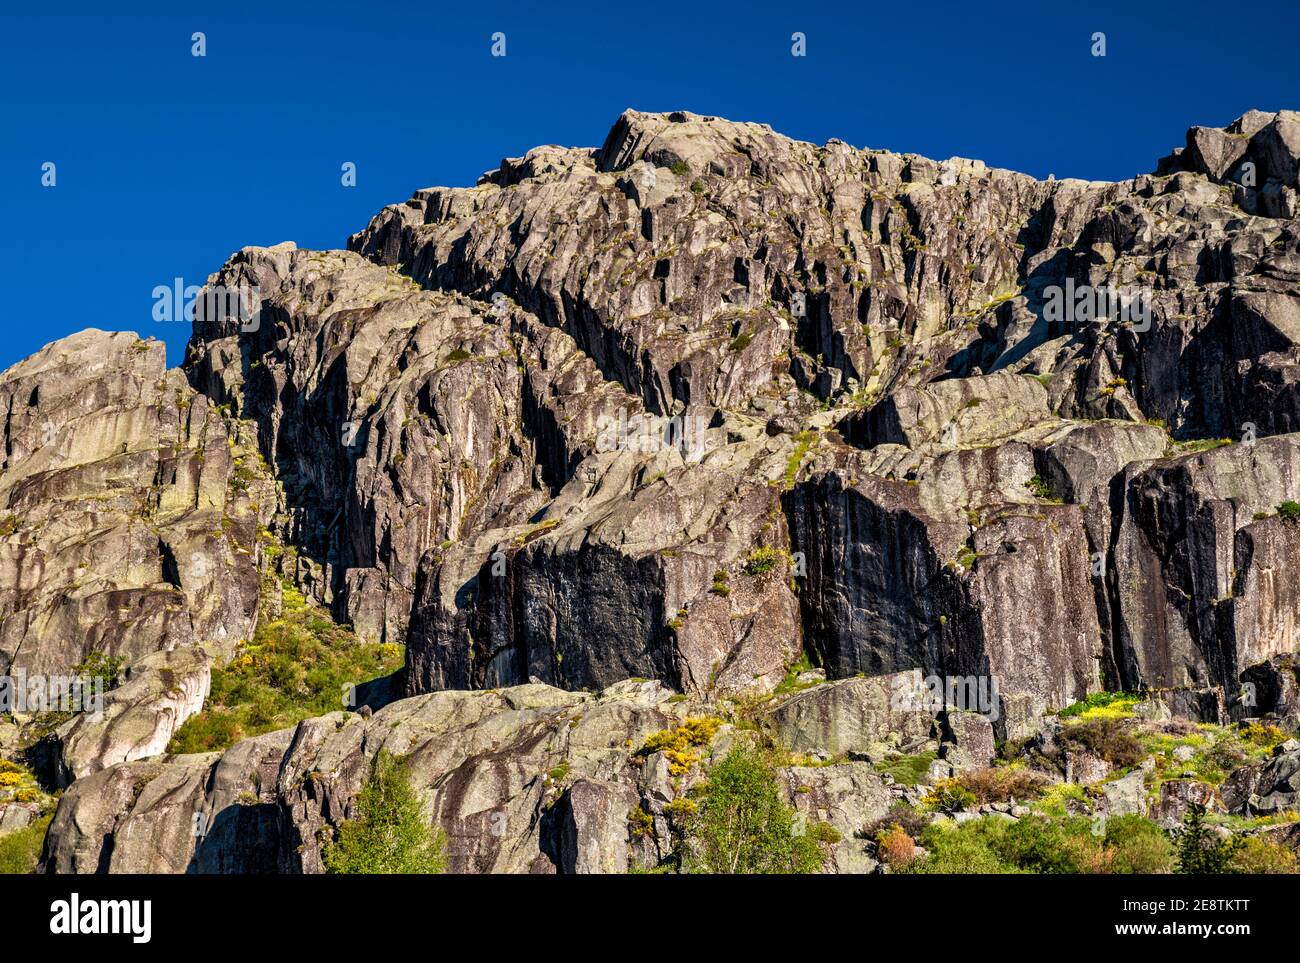 Glacial riegels, granite boulders over Covao Ametade, Cantaros massif, Serra da Estrela Natural Park, Centro region, Portugal Stock Photo